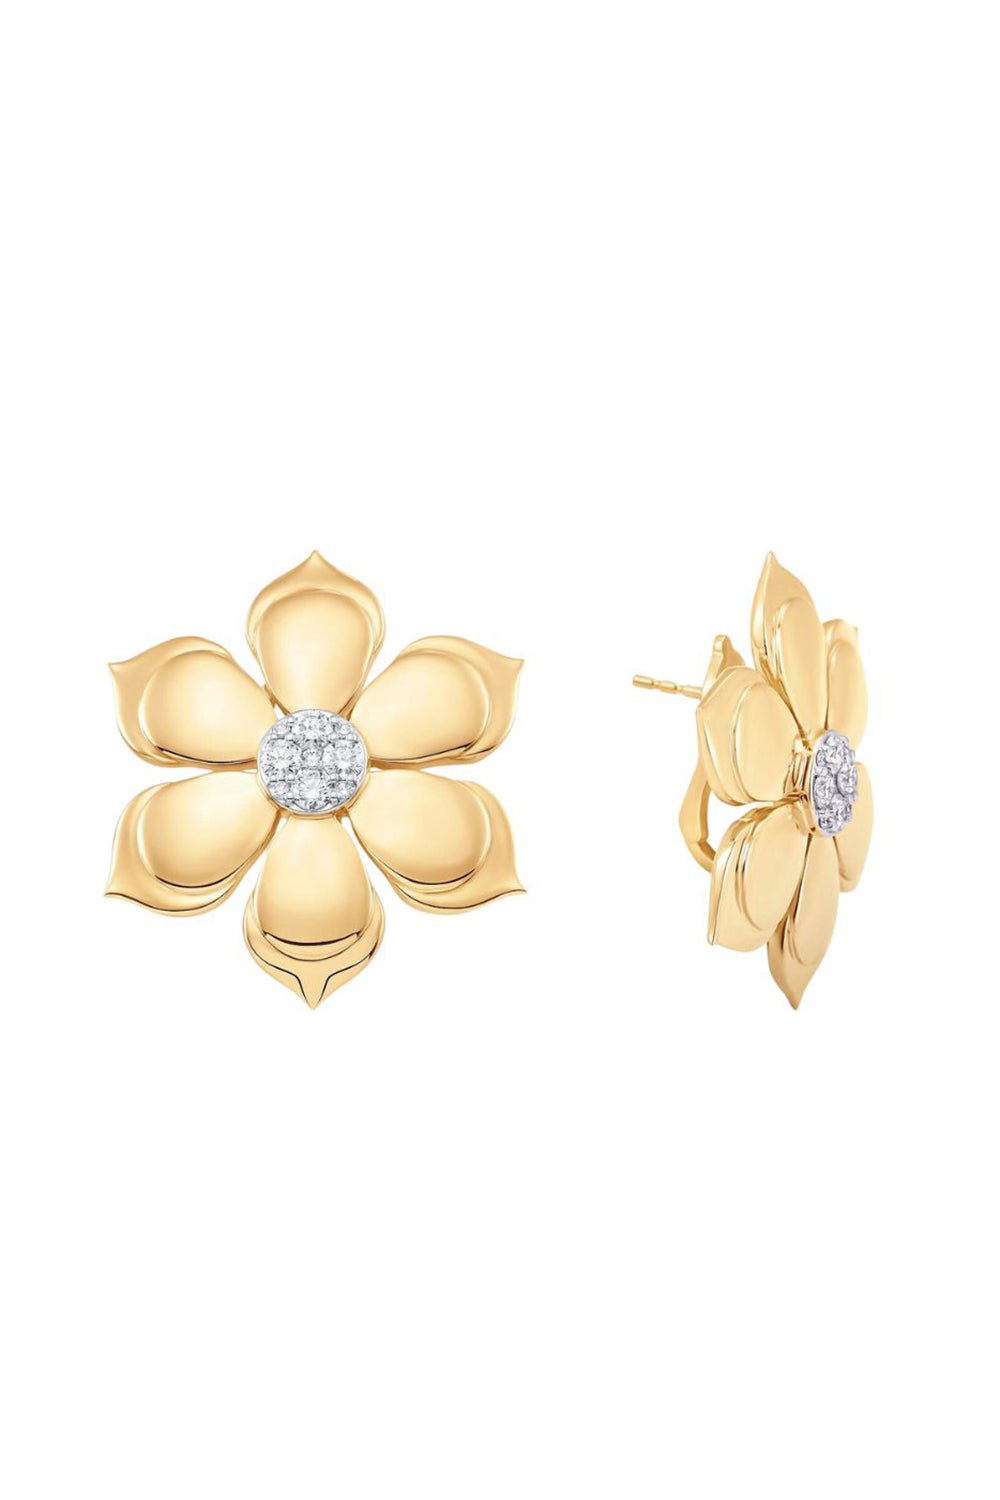 SARA WEINSTOCK-Lierre Flower Earrings-YELLOW GOLD